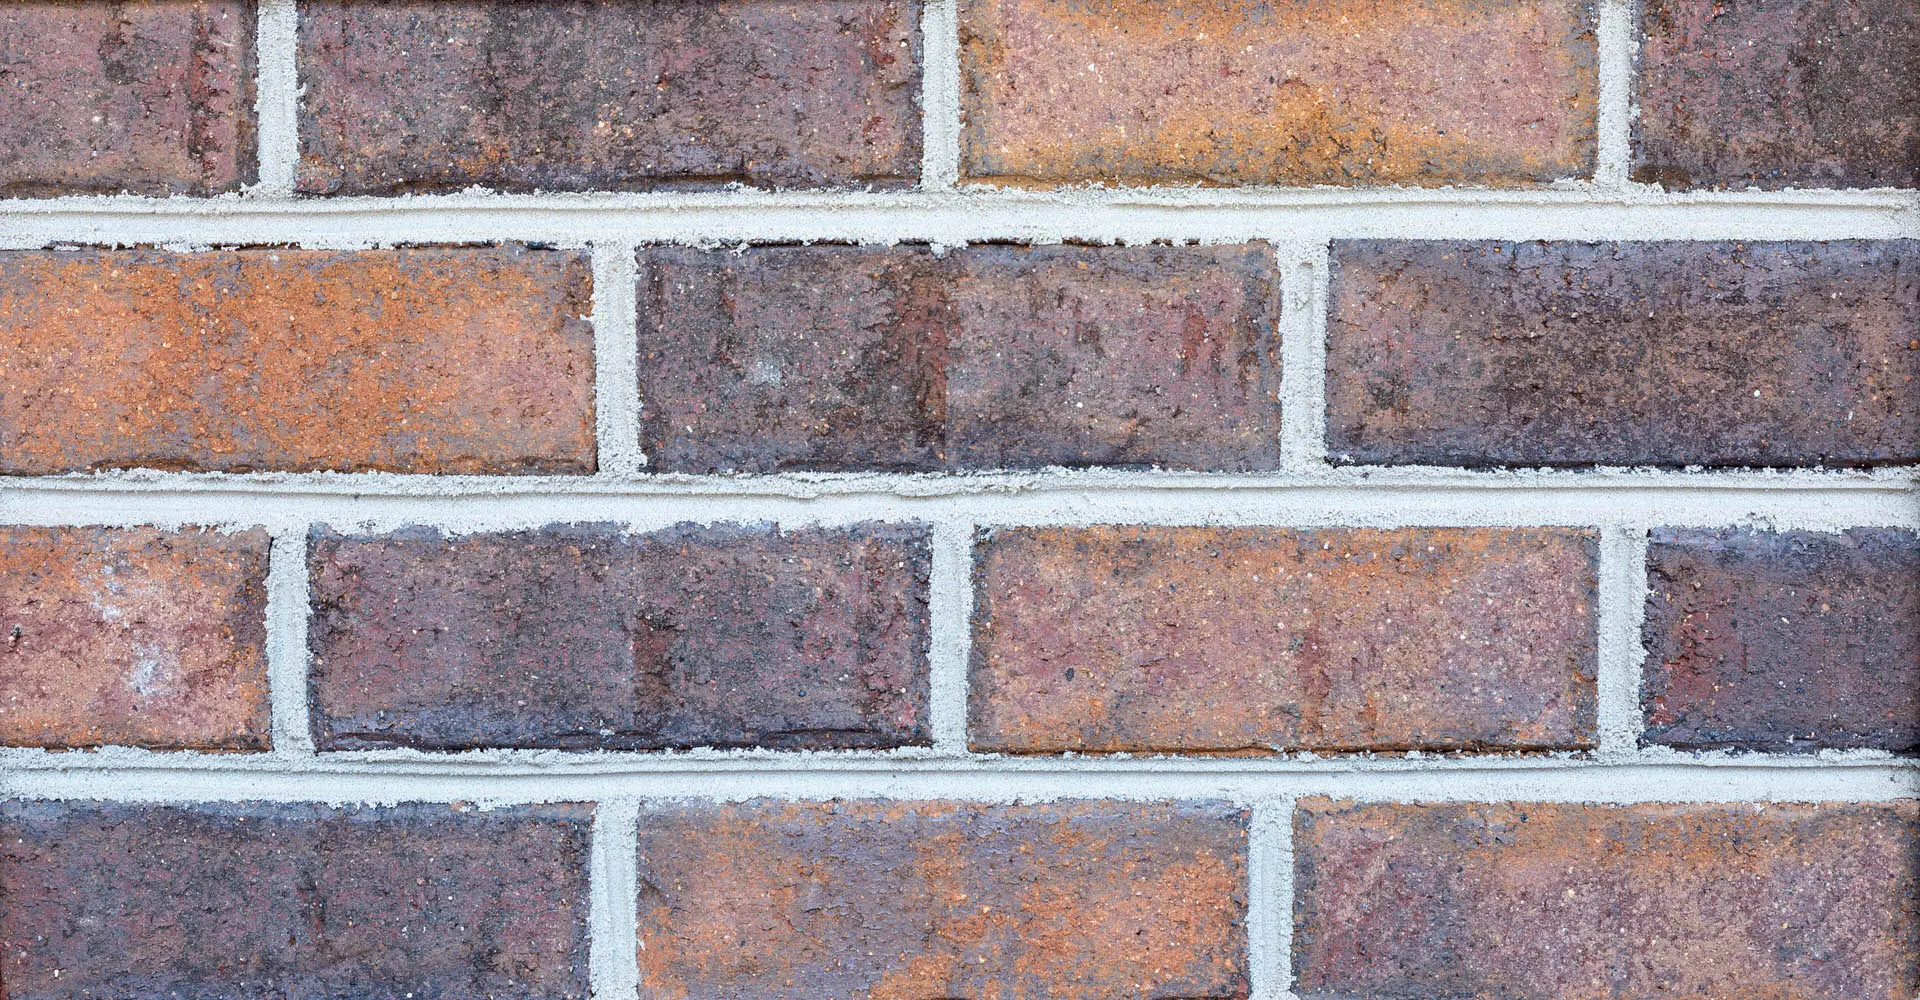 Quail Hollow Engineer Brick Wall